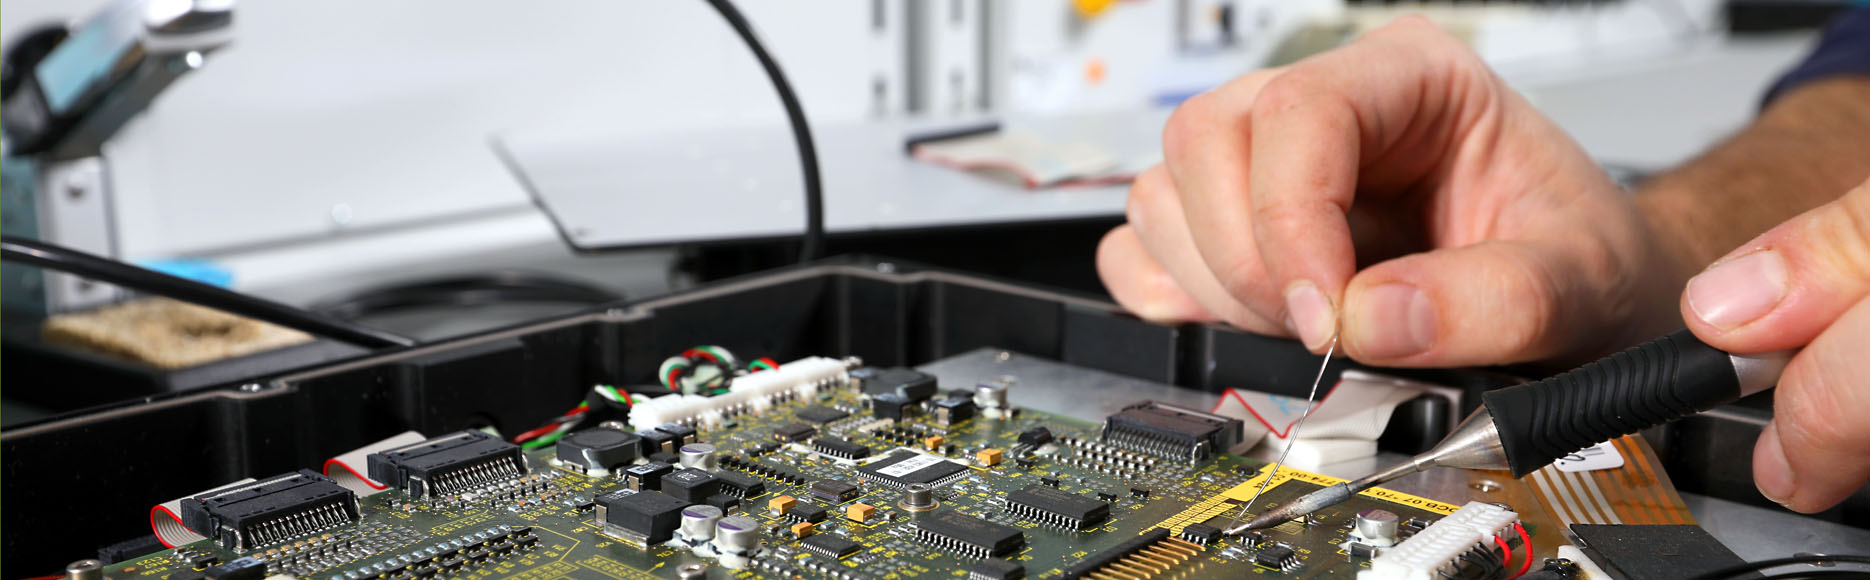 Elektroniker repariert ein Gerät